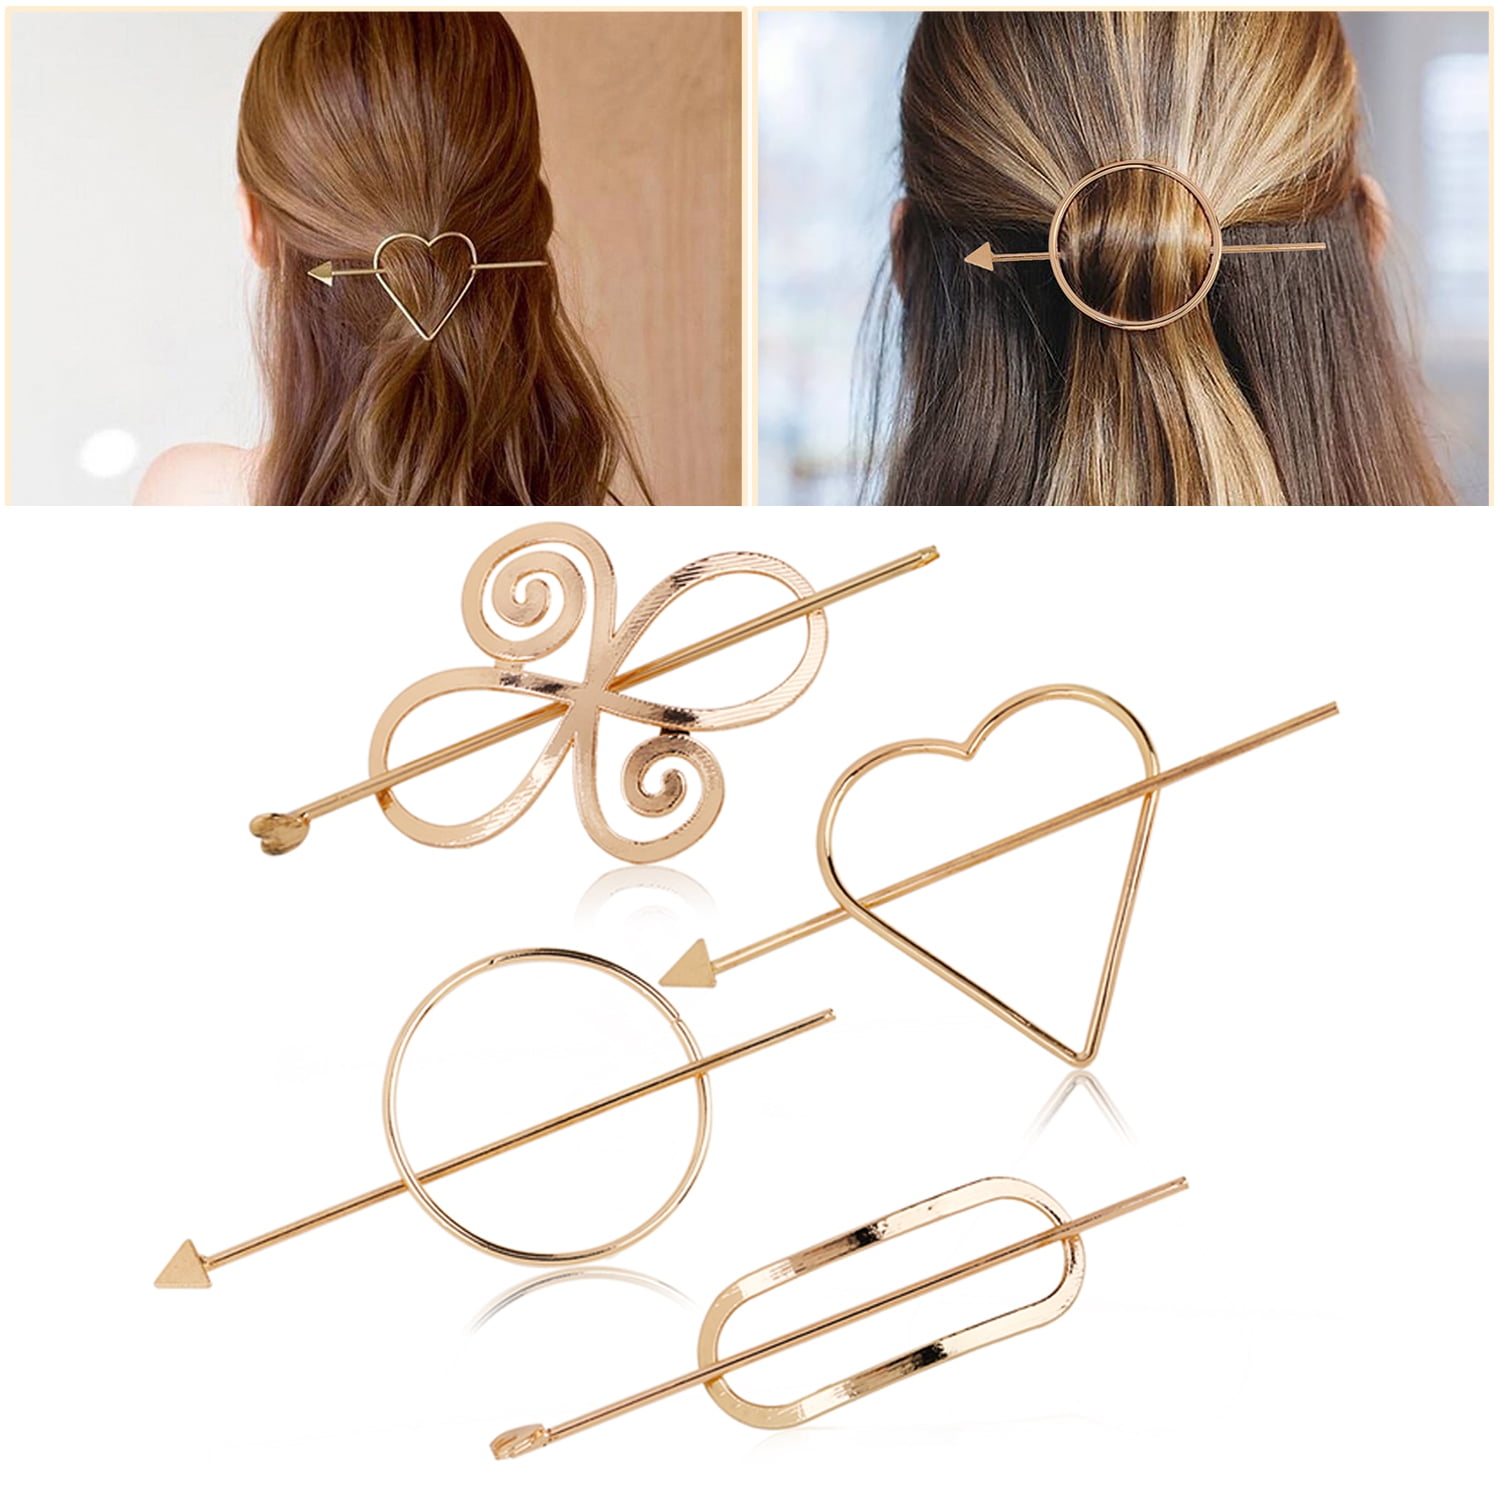 Women's Girls Multi-Geometric Hair Clips Metallic Barrette Slide Grips Hairpins 